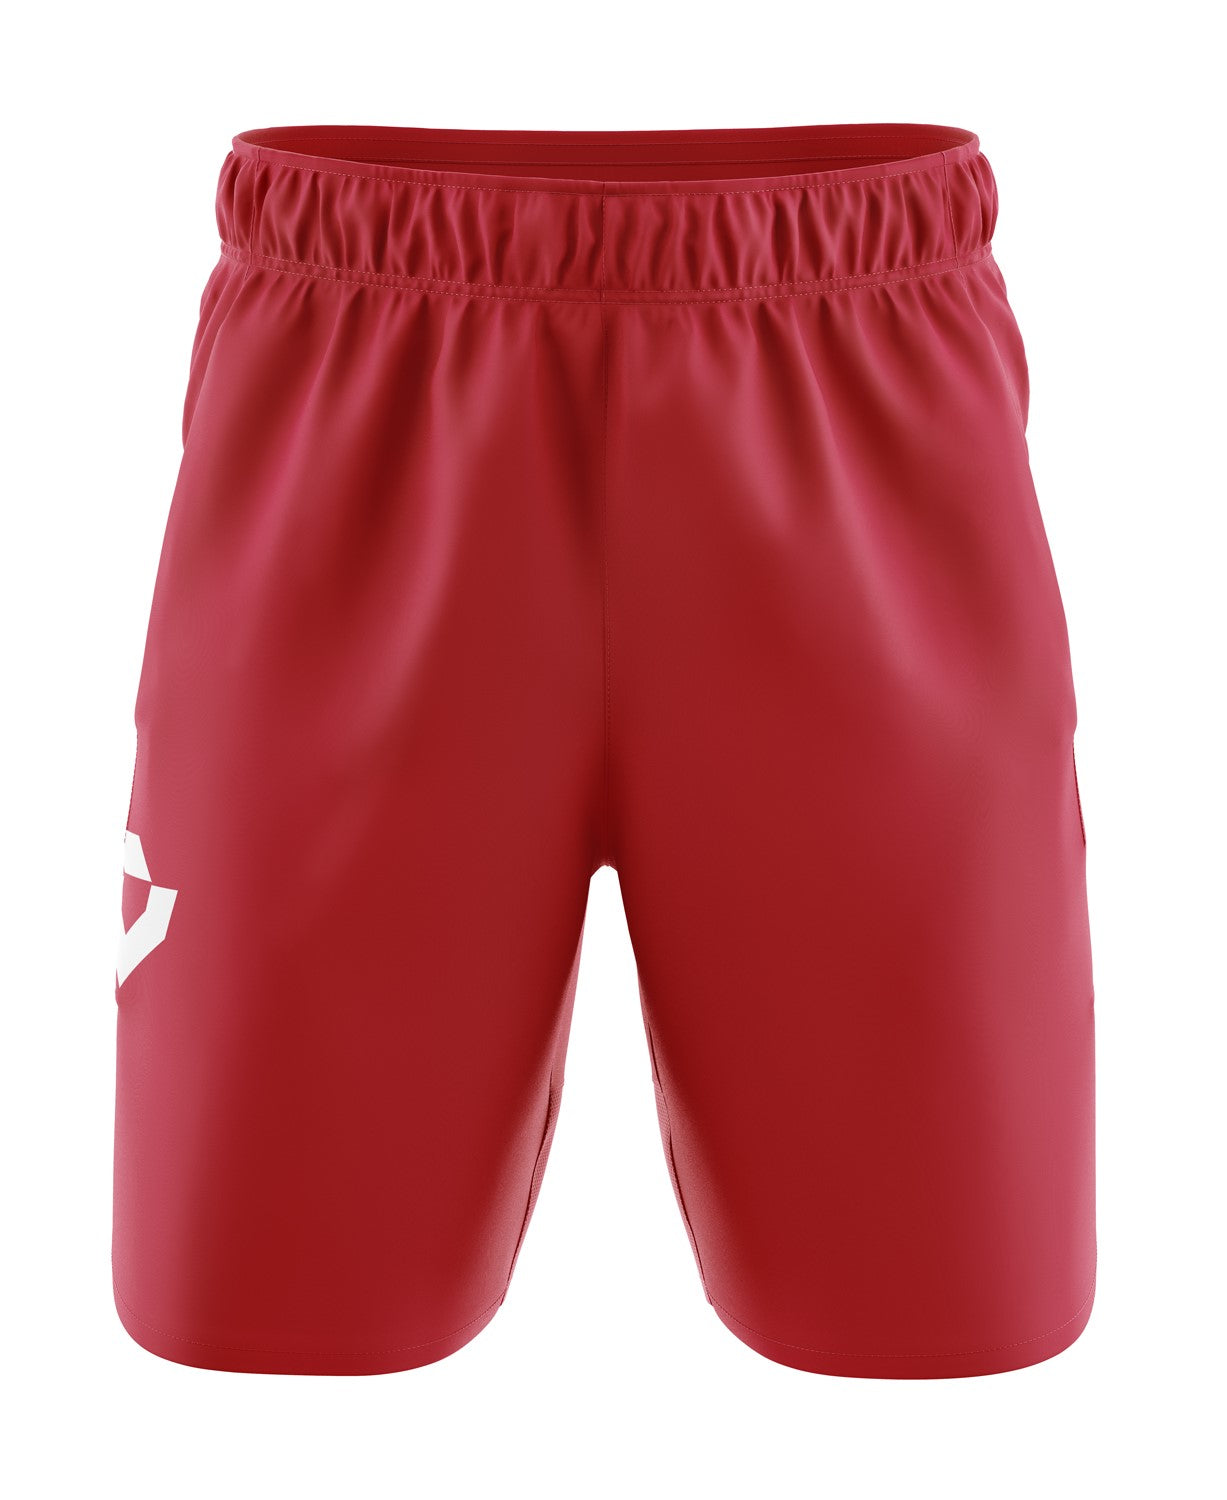 DeMarini Mens Microfiber Shorts - Red